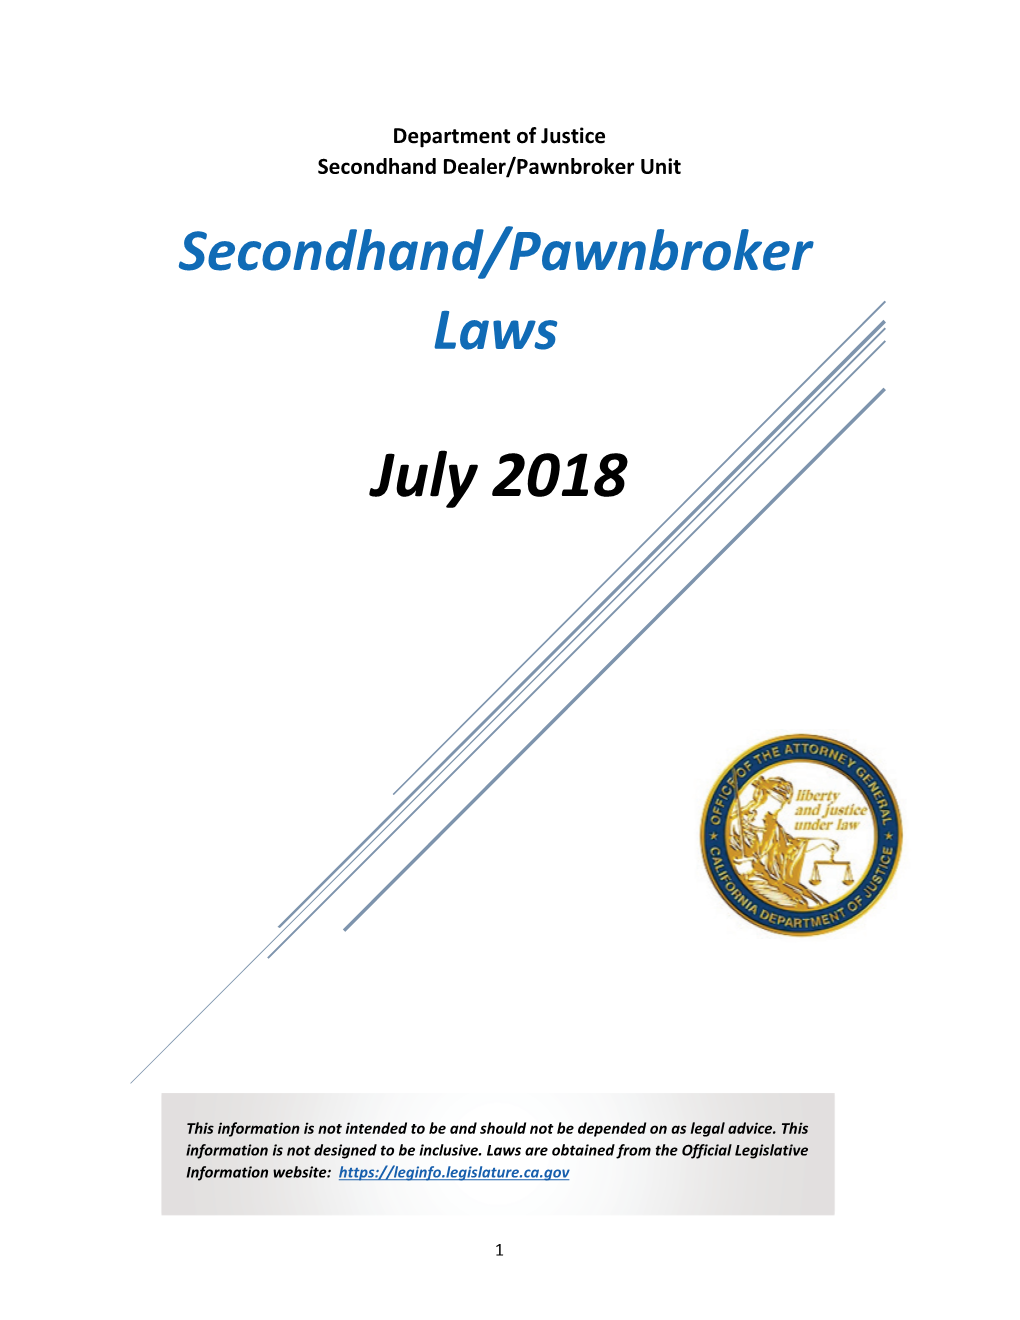 Secondhand Dealer Laws 2018